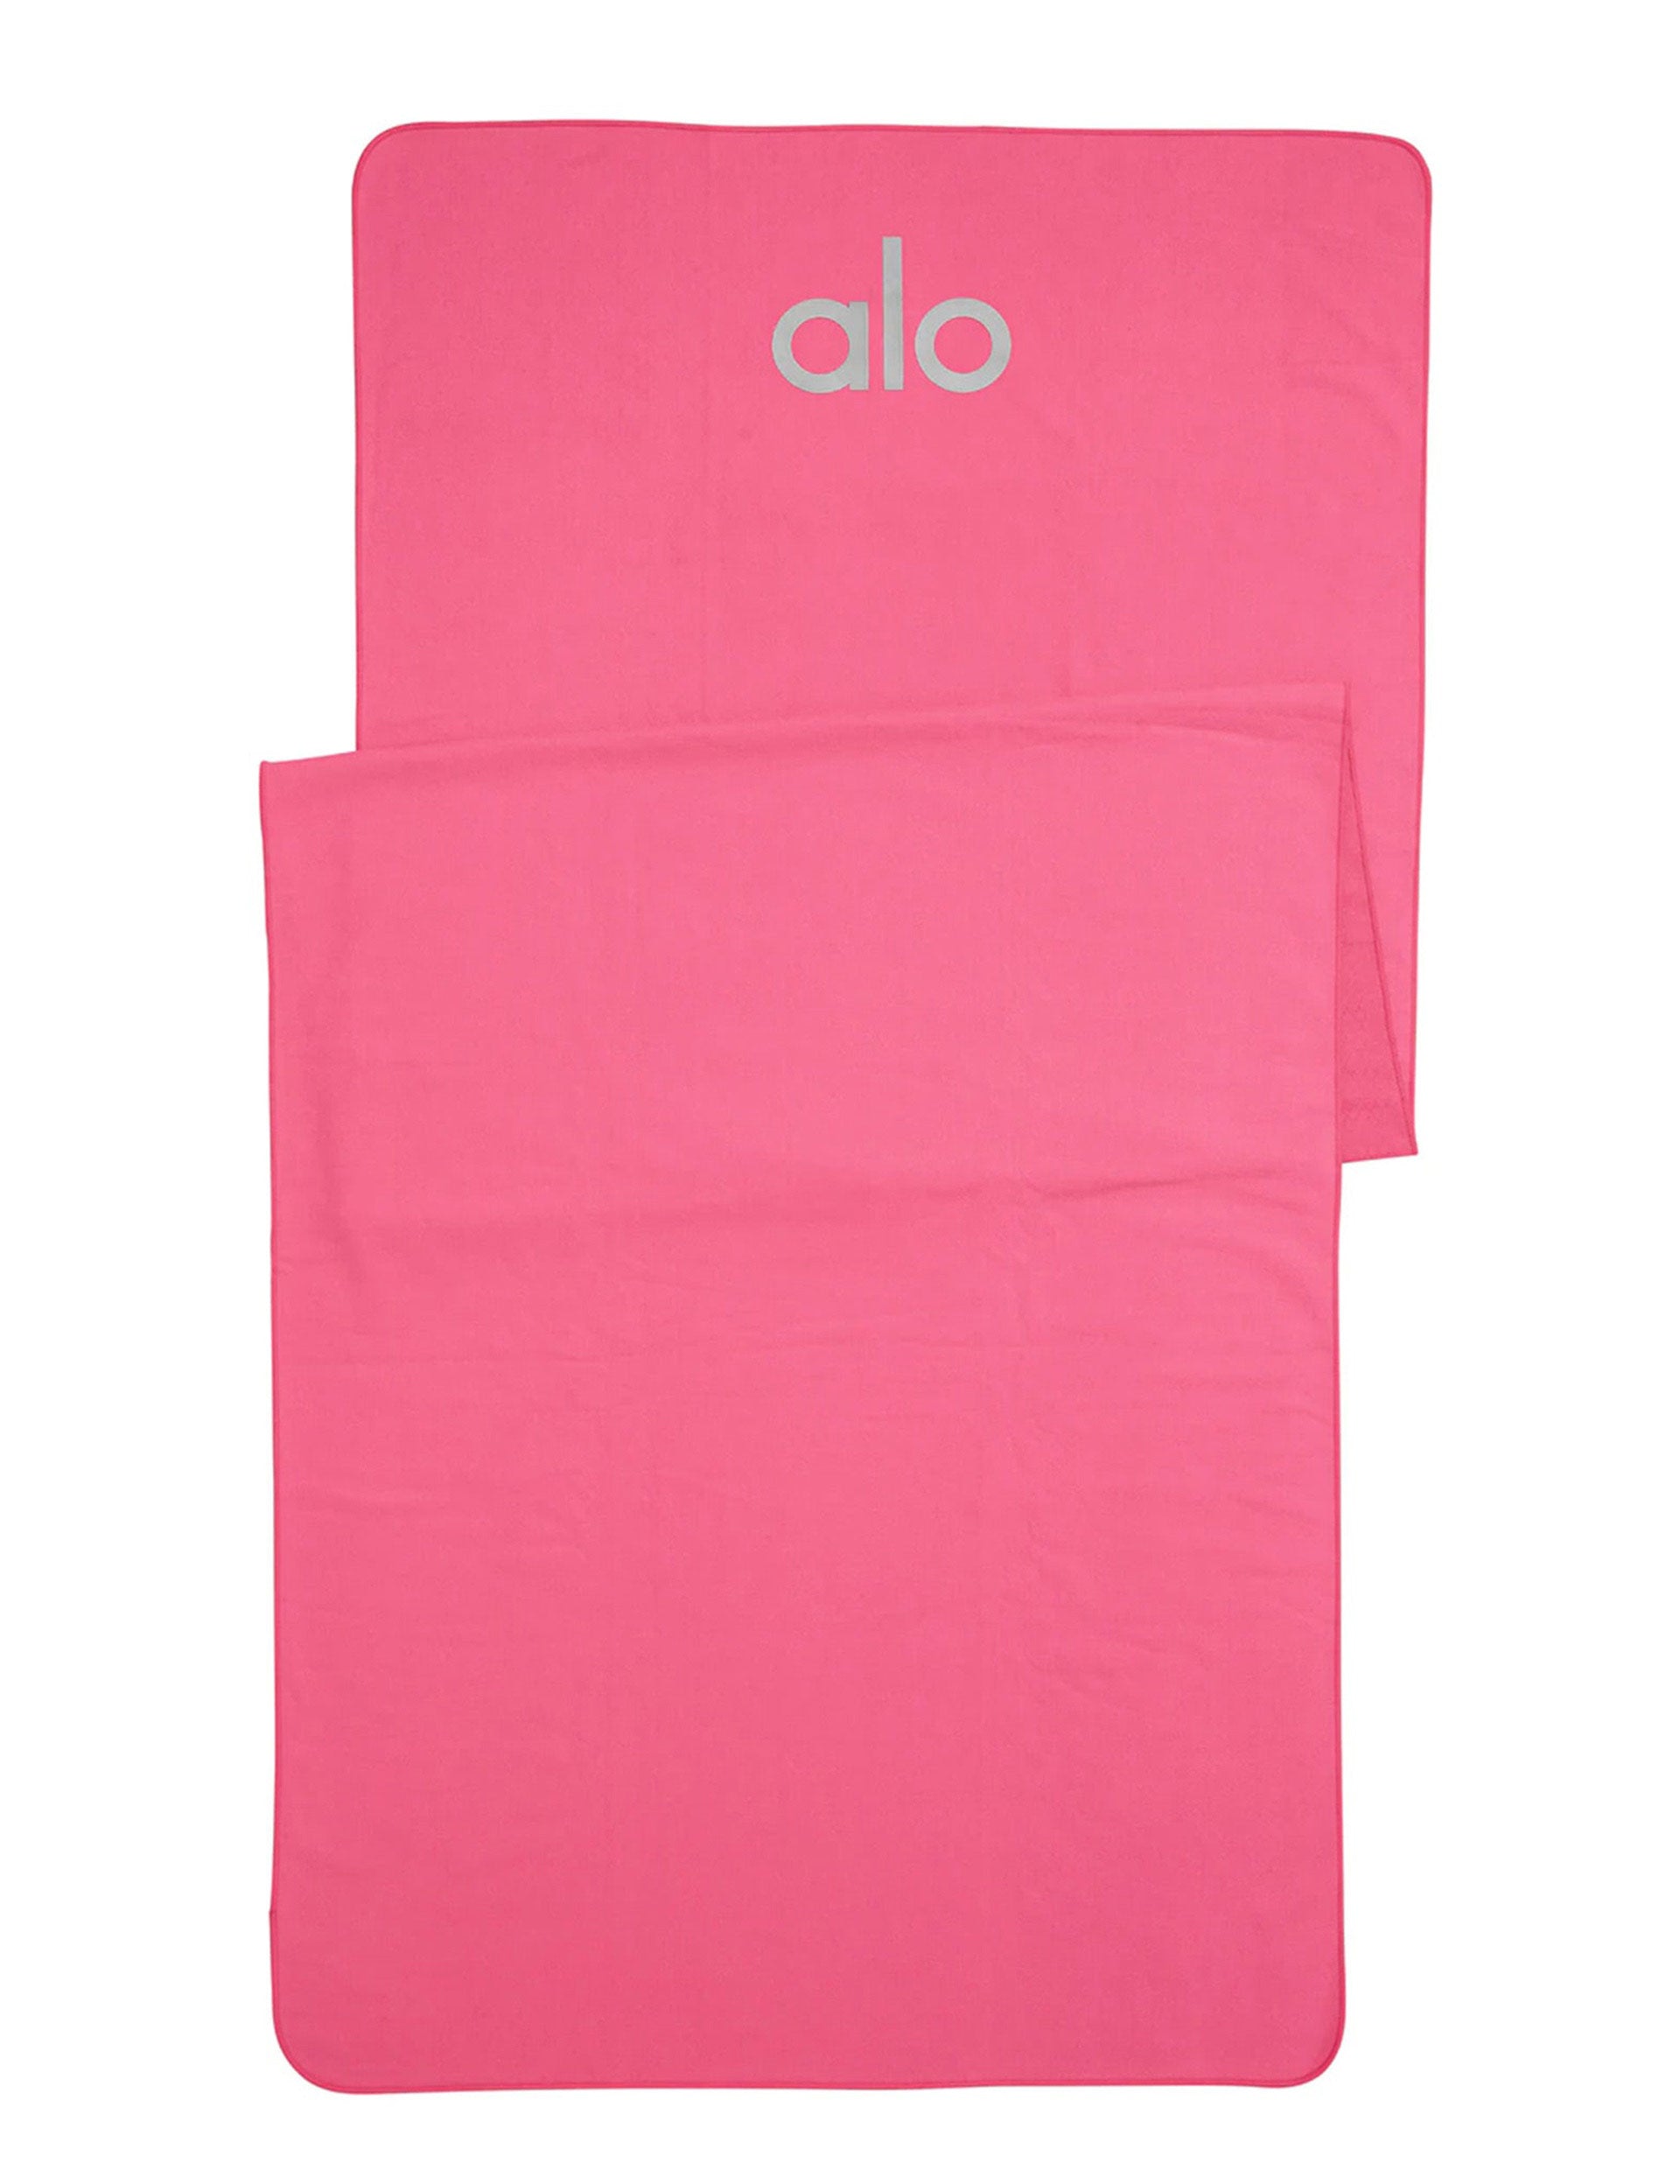 Alo Yoga Grounded No-Slip Towel - Hot Pinkimage1- The Sports Edit